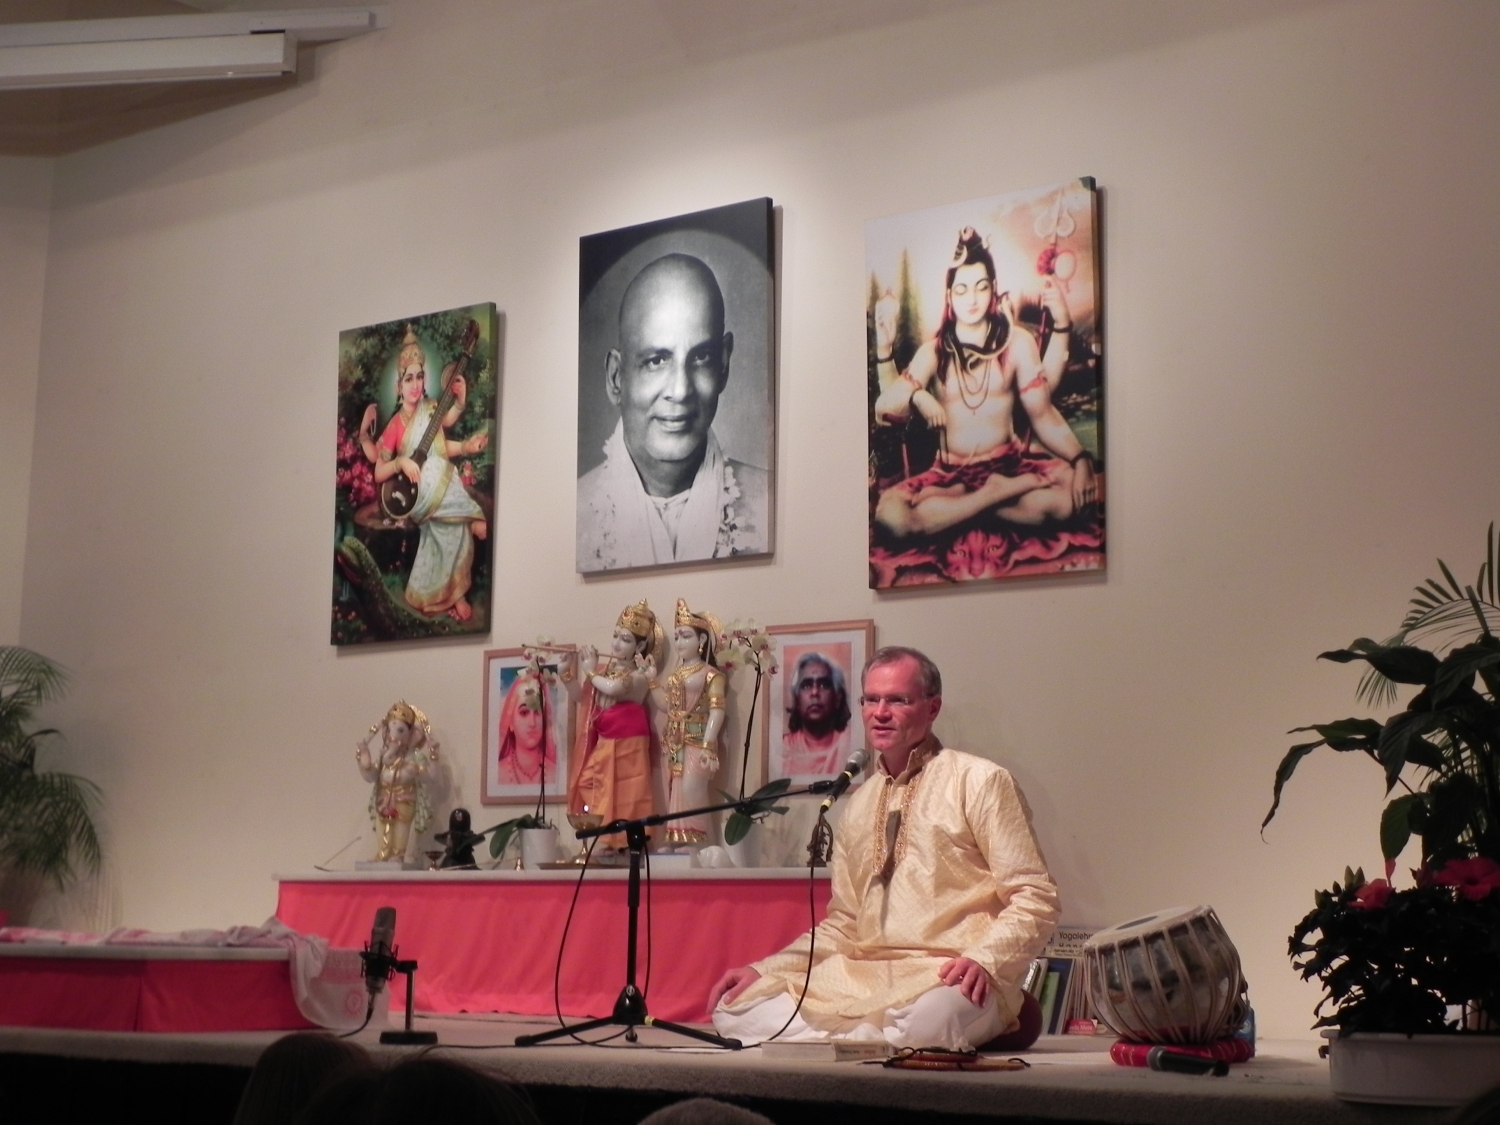 Encontro de H.H. Jagat Guru Amrta Sūryānanda Mahā Rāja com o Mestre Sukadev Bretz - Yoga Vidya, Bad Meinberg, Alemanha - 2012, Março